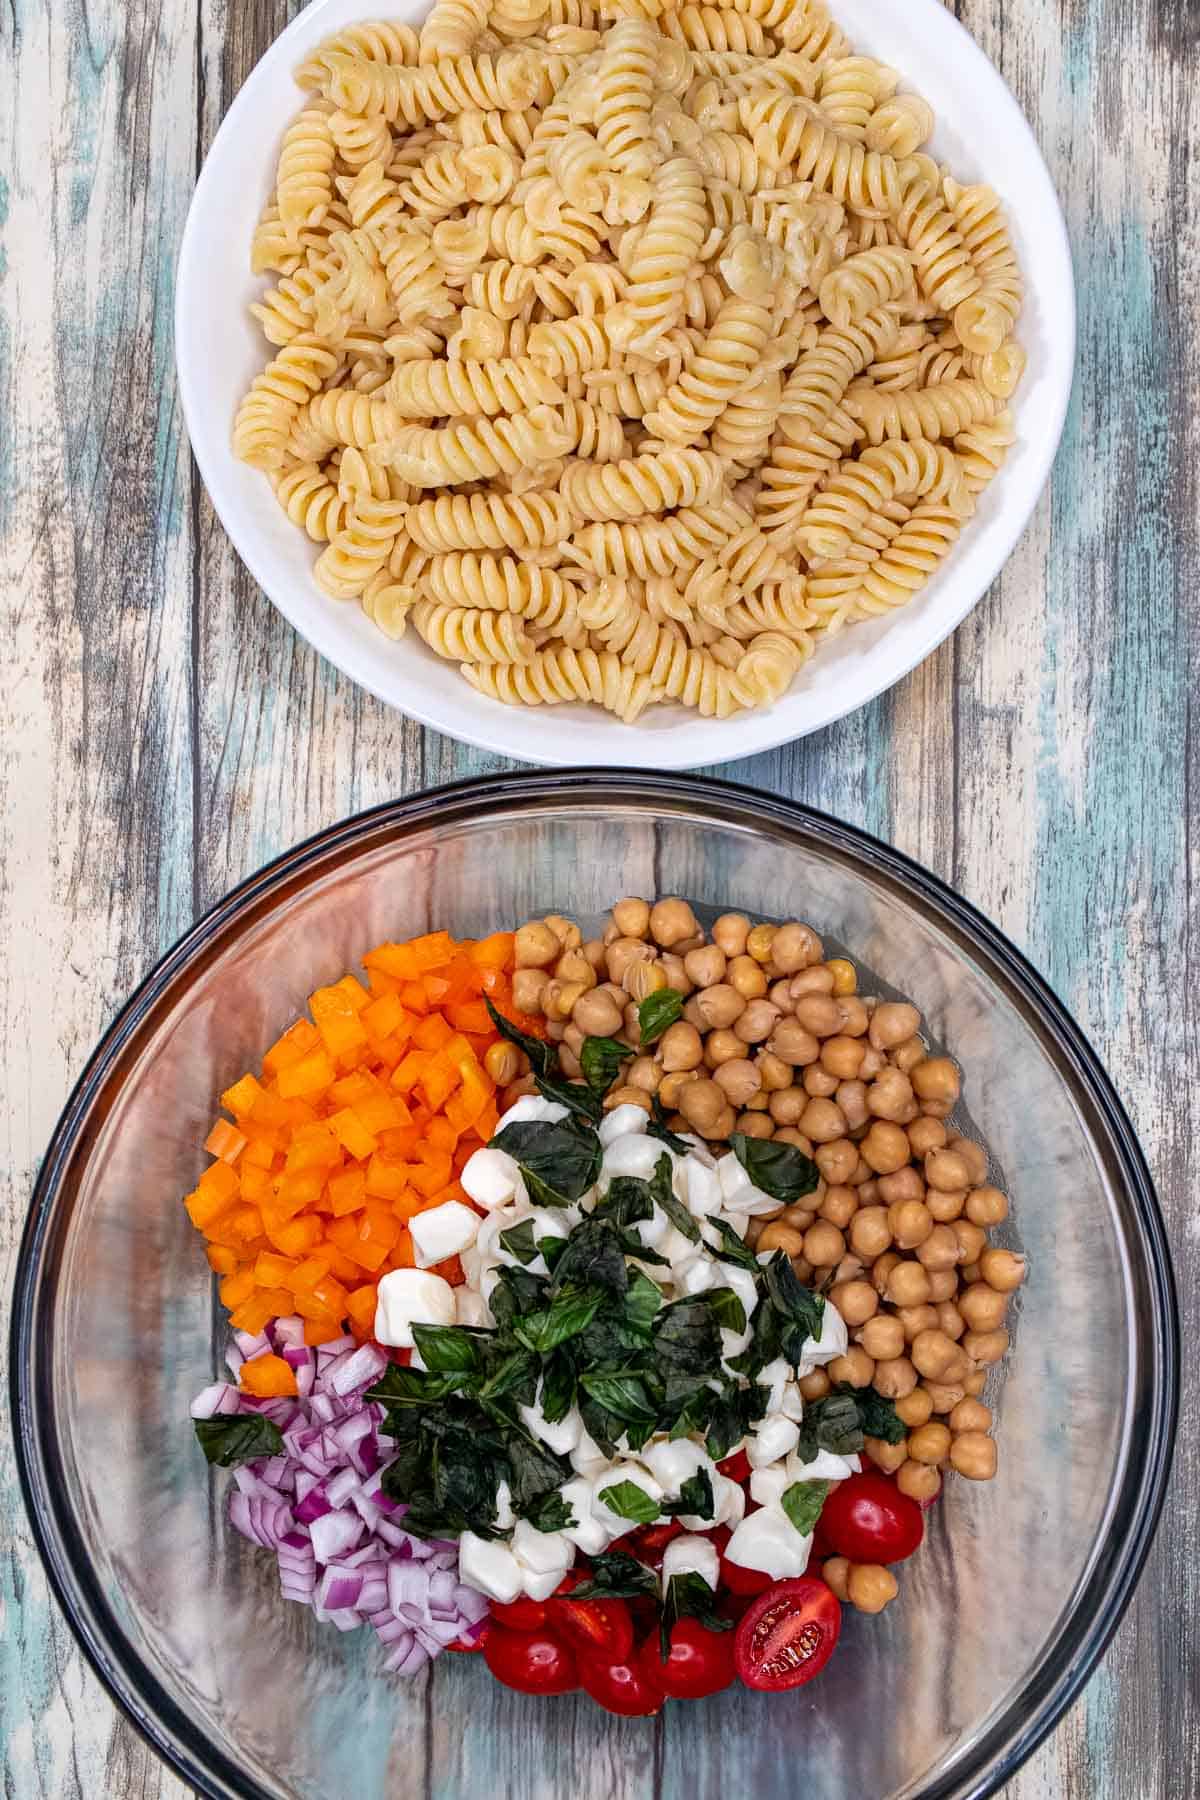 Prepared ingredients for easy pasta salad.